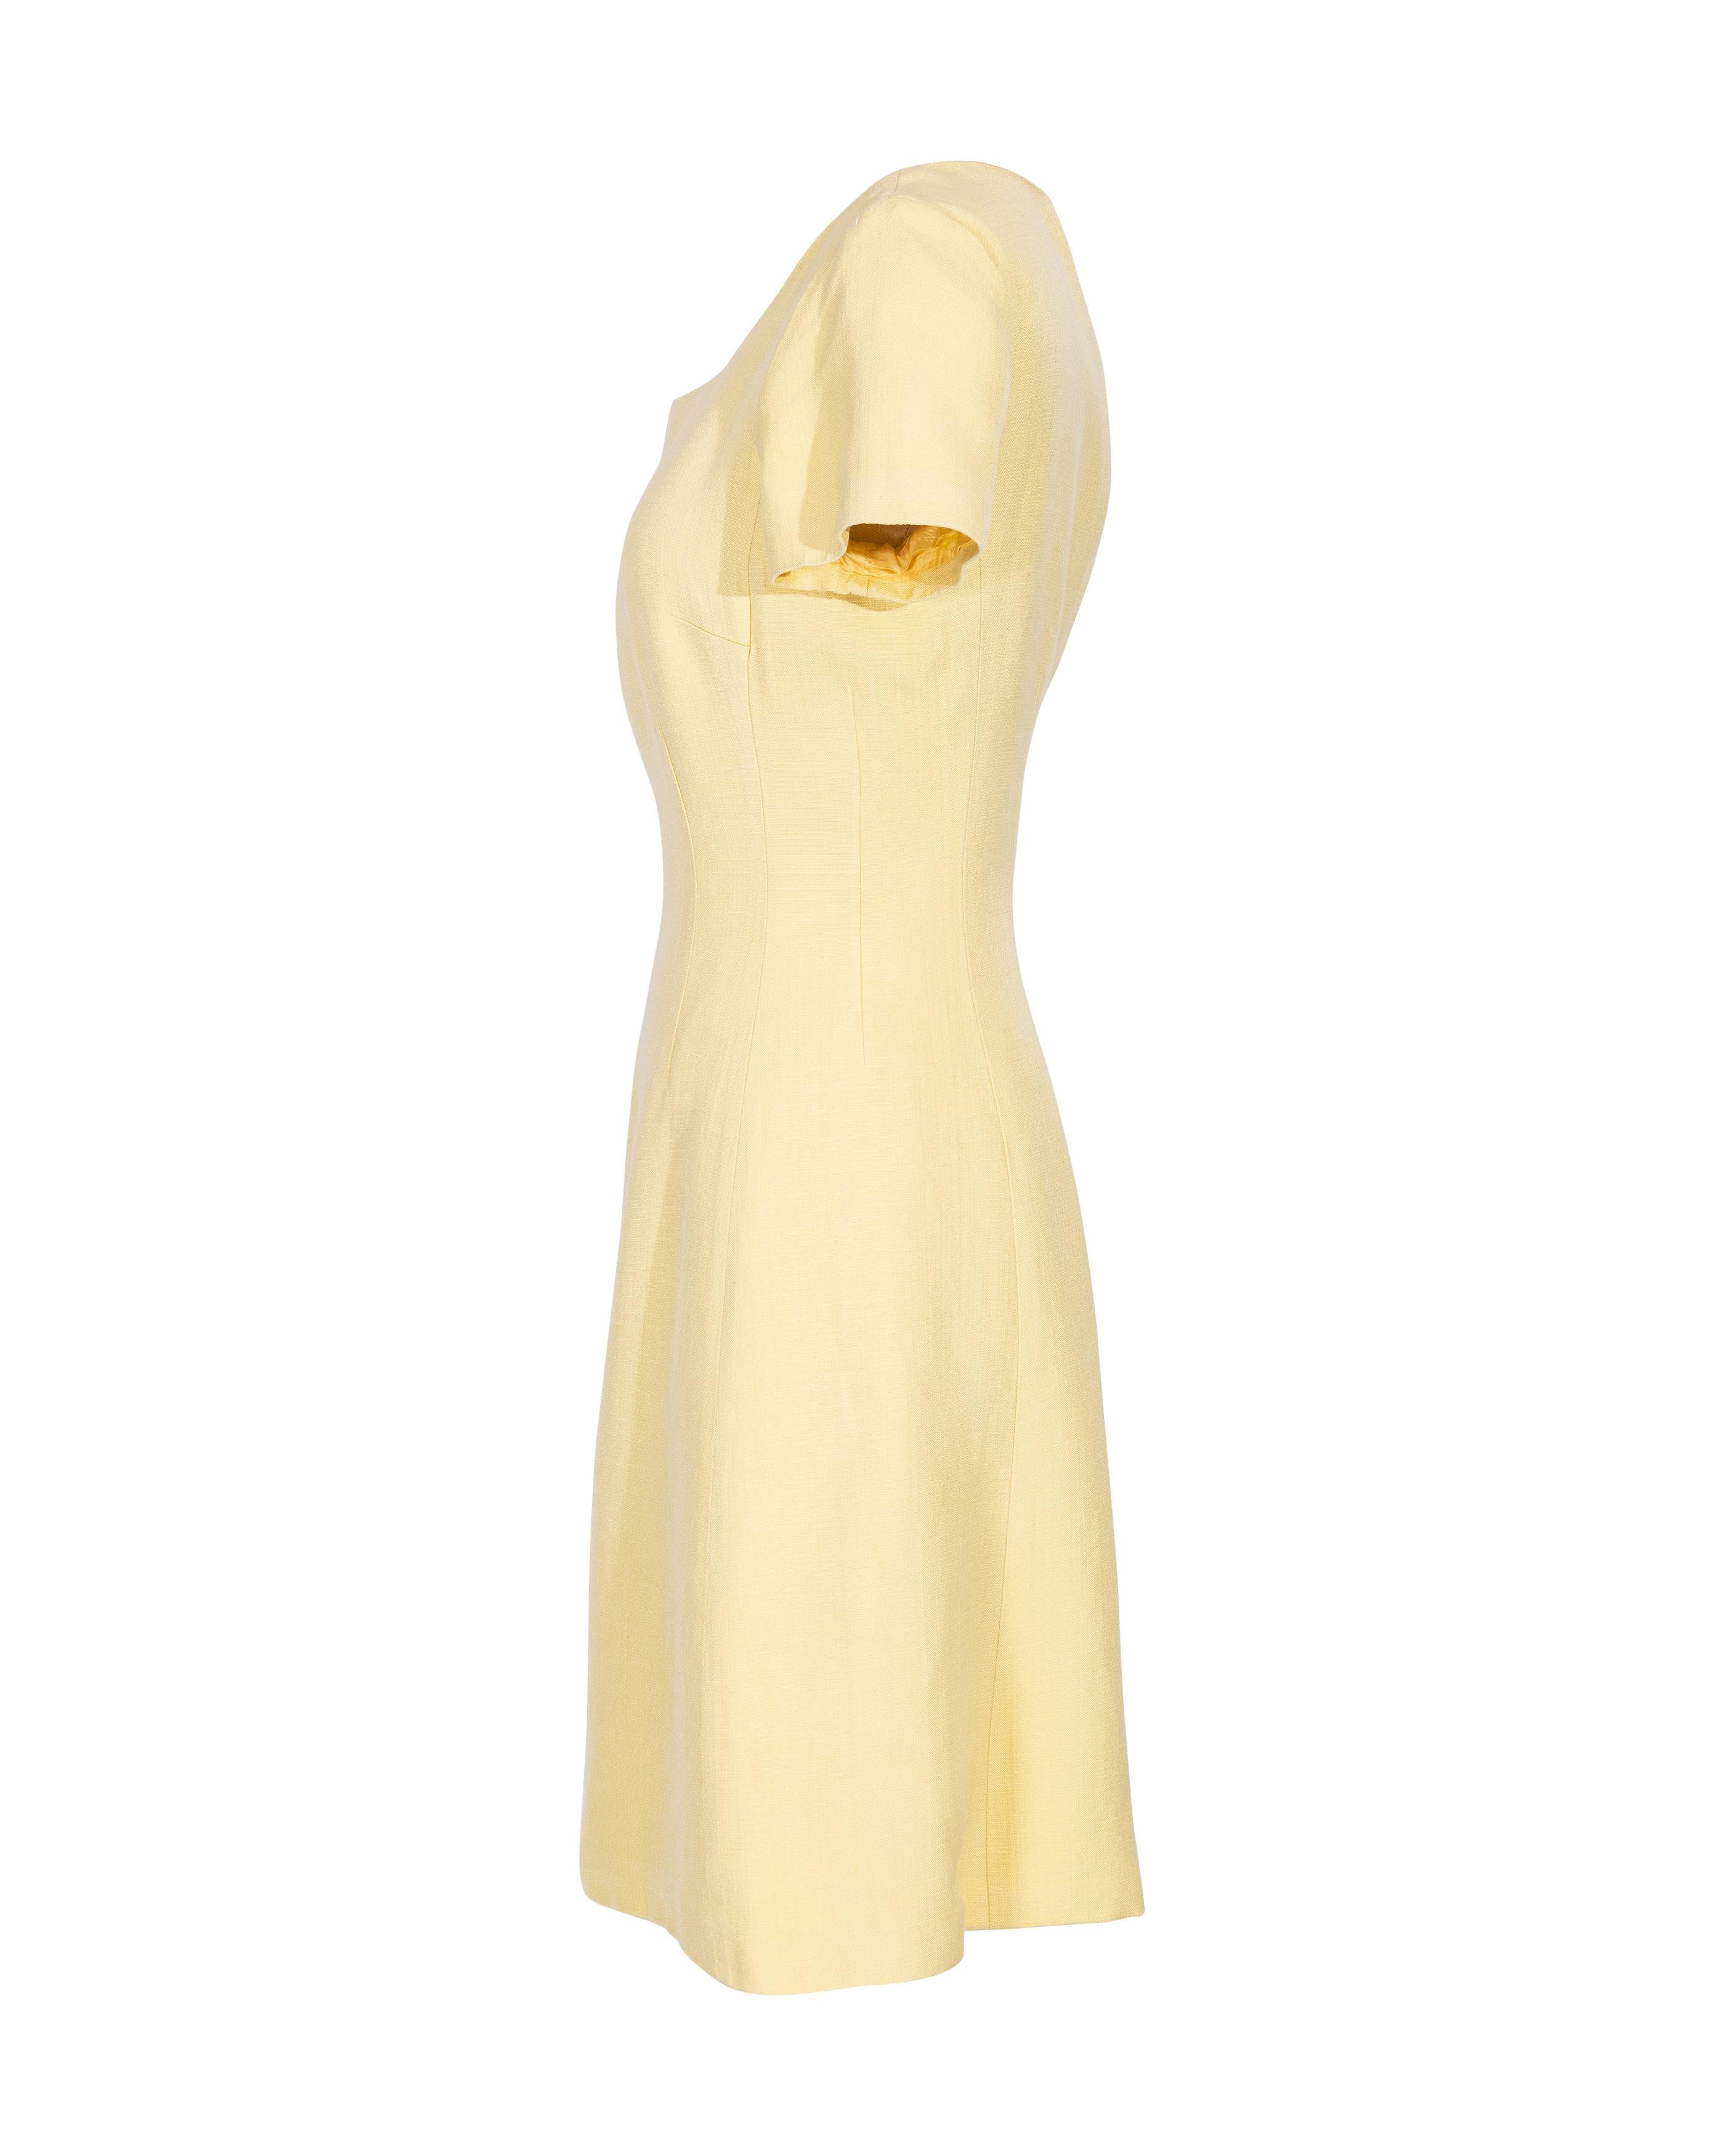 Women's S/S 1992 Prada by Miuccia Prada Butter Yellow Short Sleeve Mini Dress